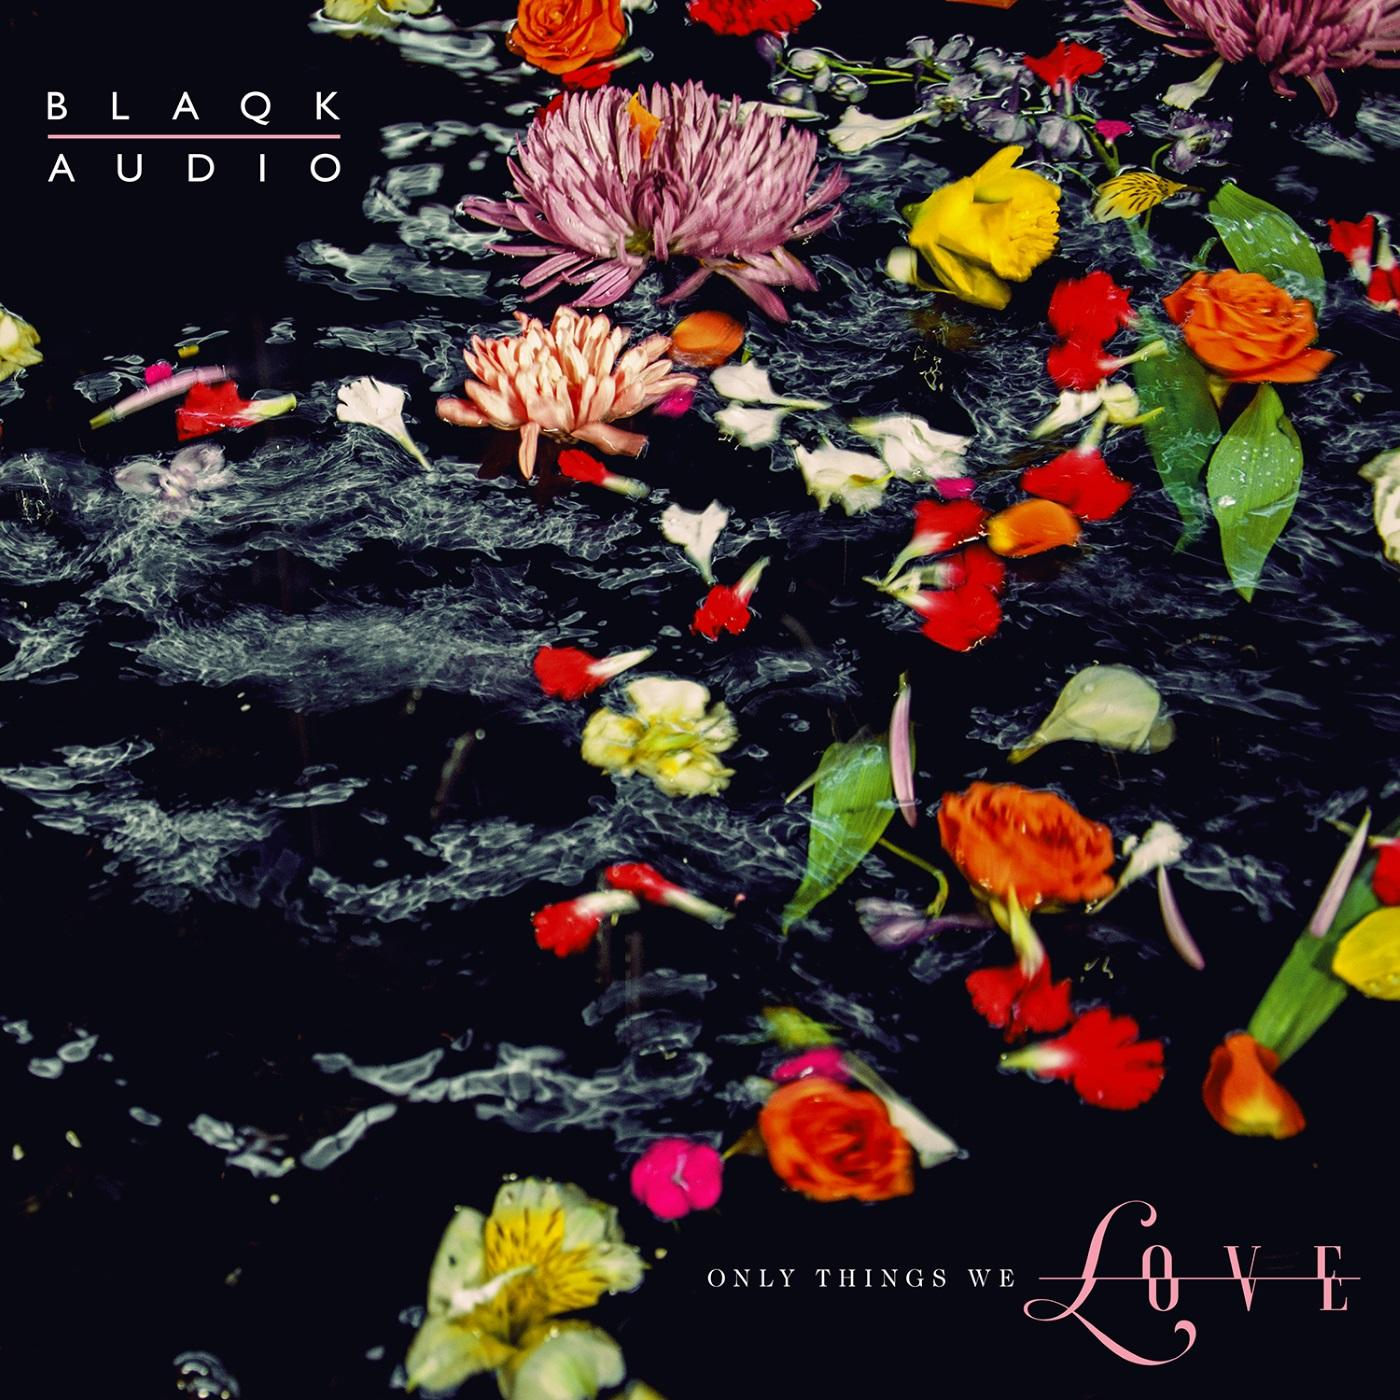 Things Love Audio Blaqk (CD) Only - - We